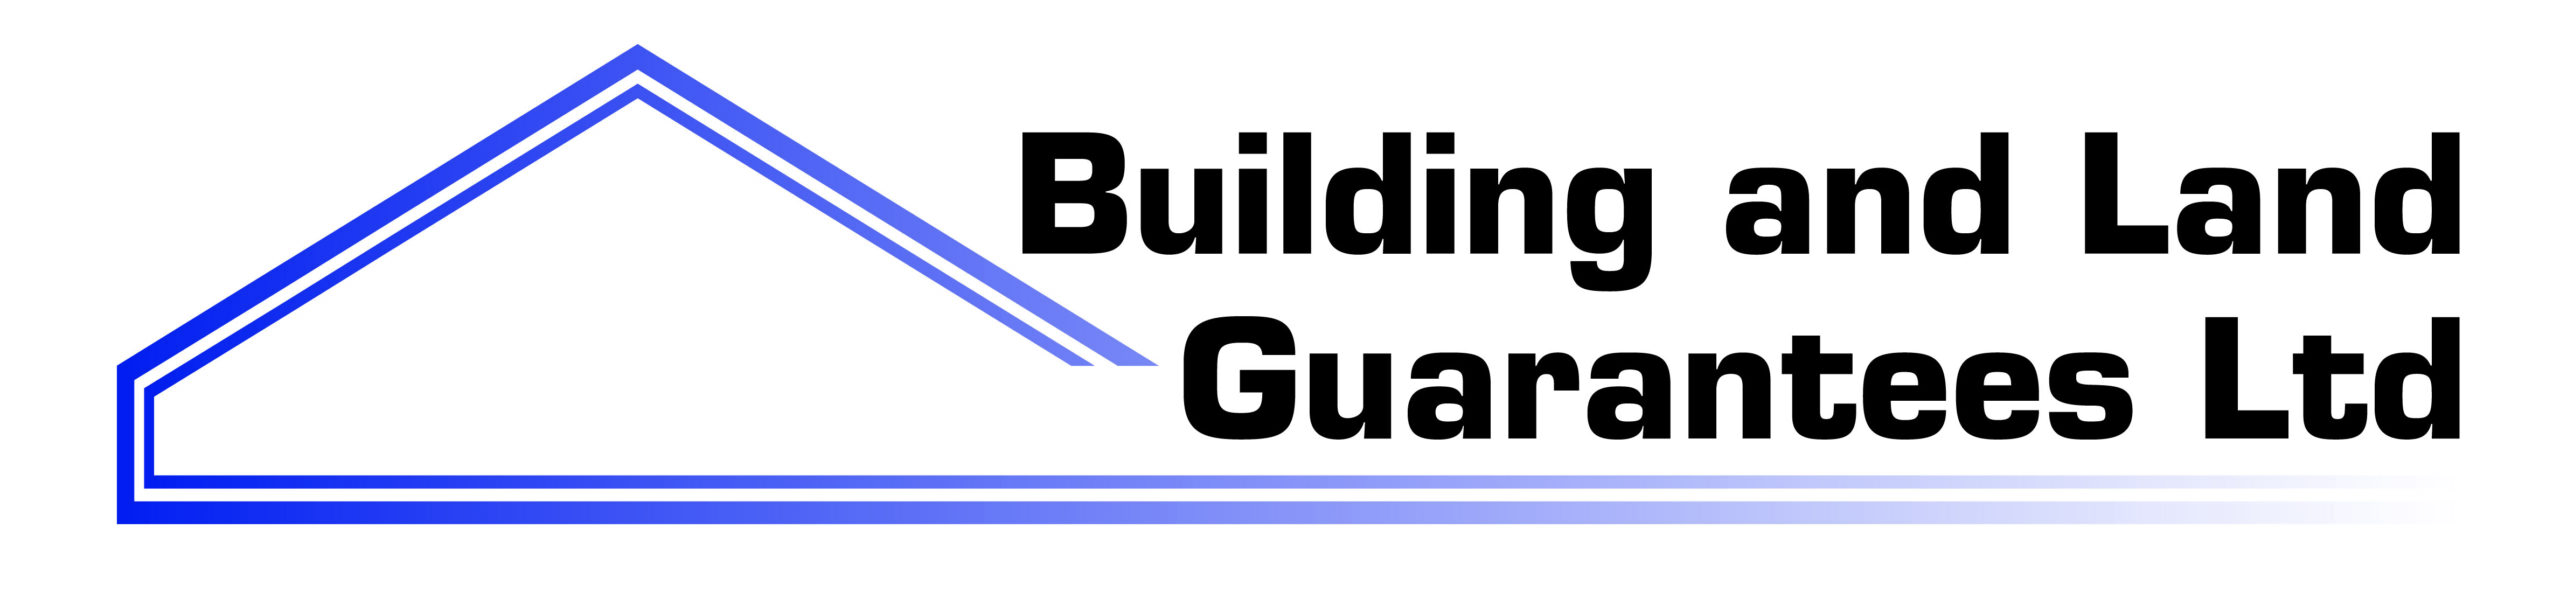 Building and Land Guarantees Ltd Logo